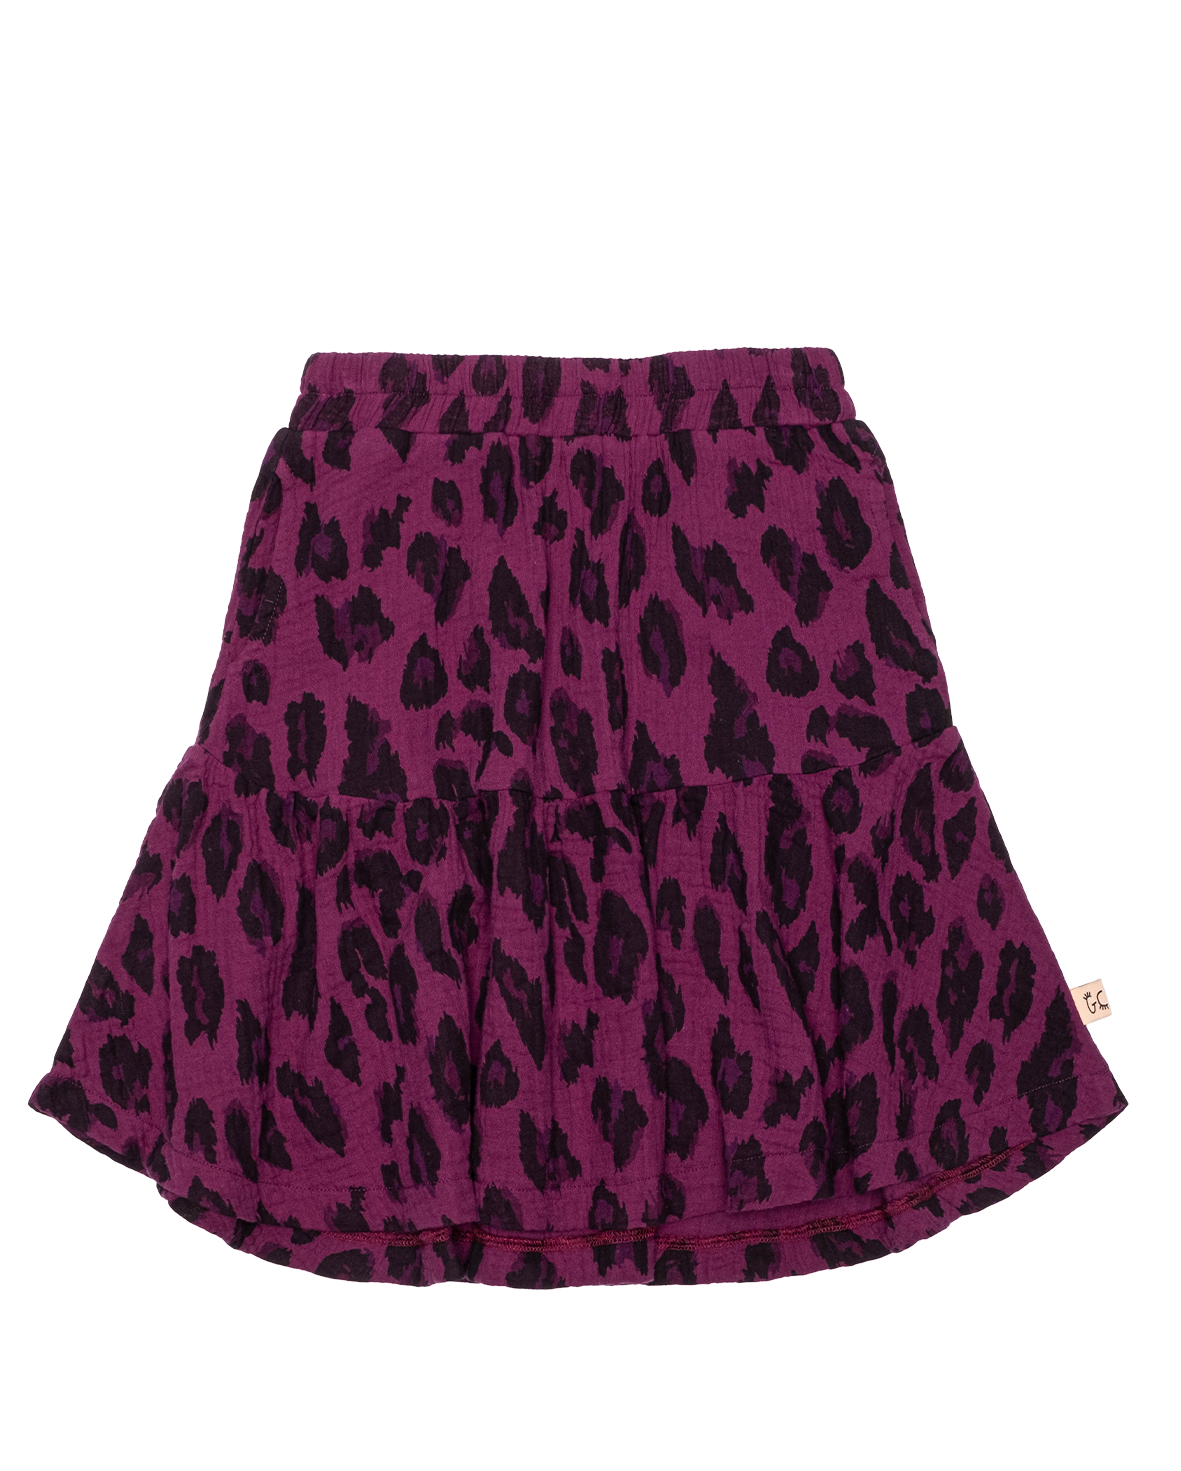 The Girld Club - Leopard Print Play Skirt